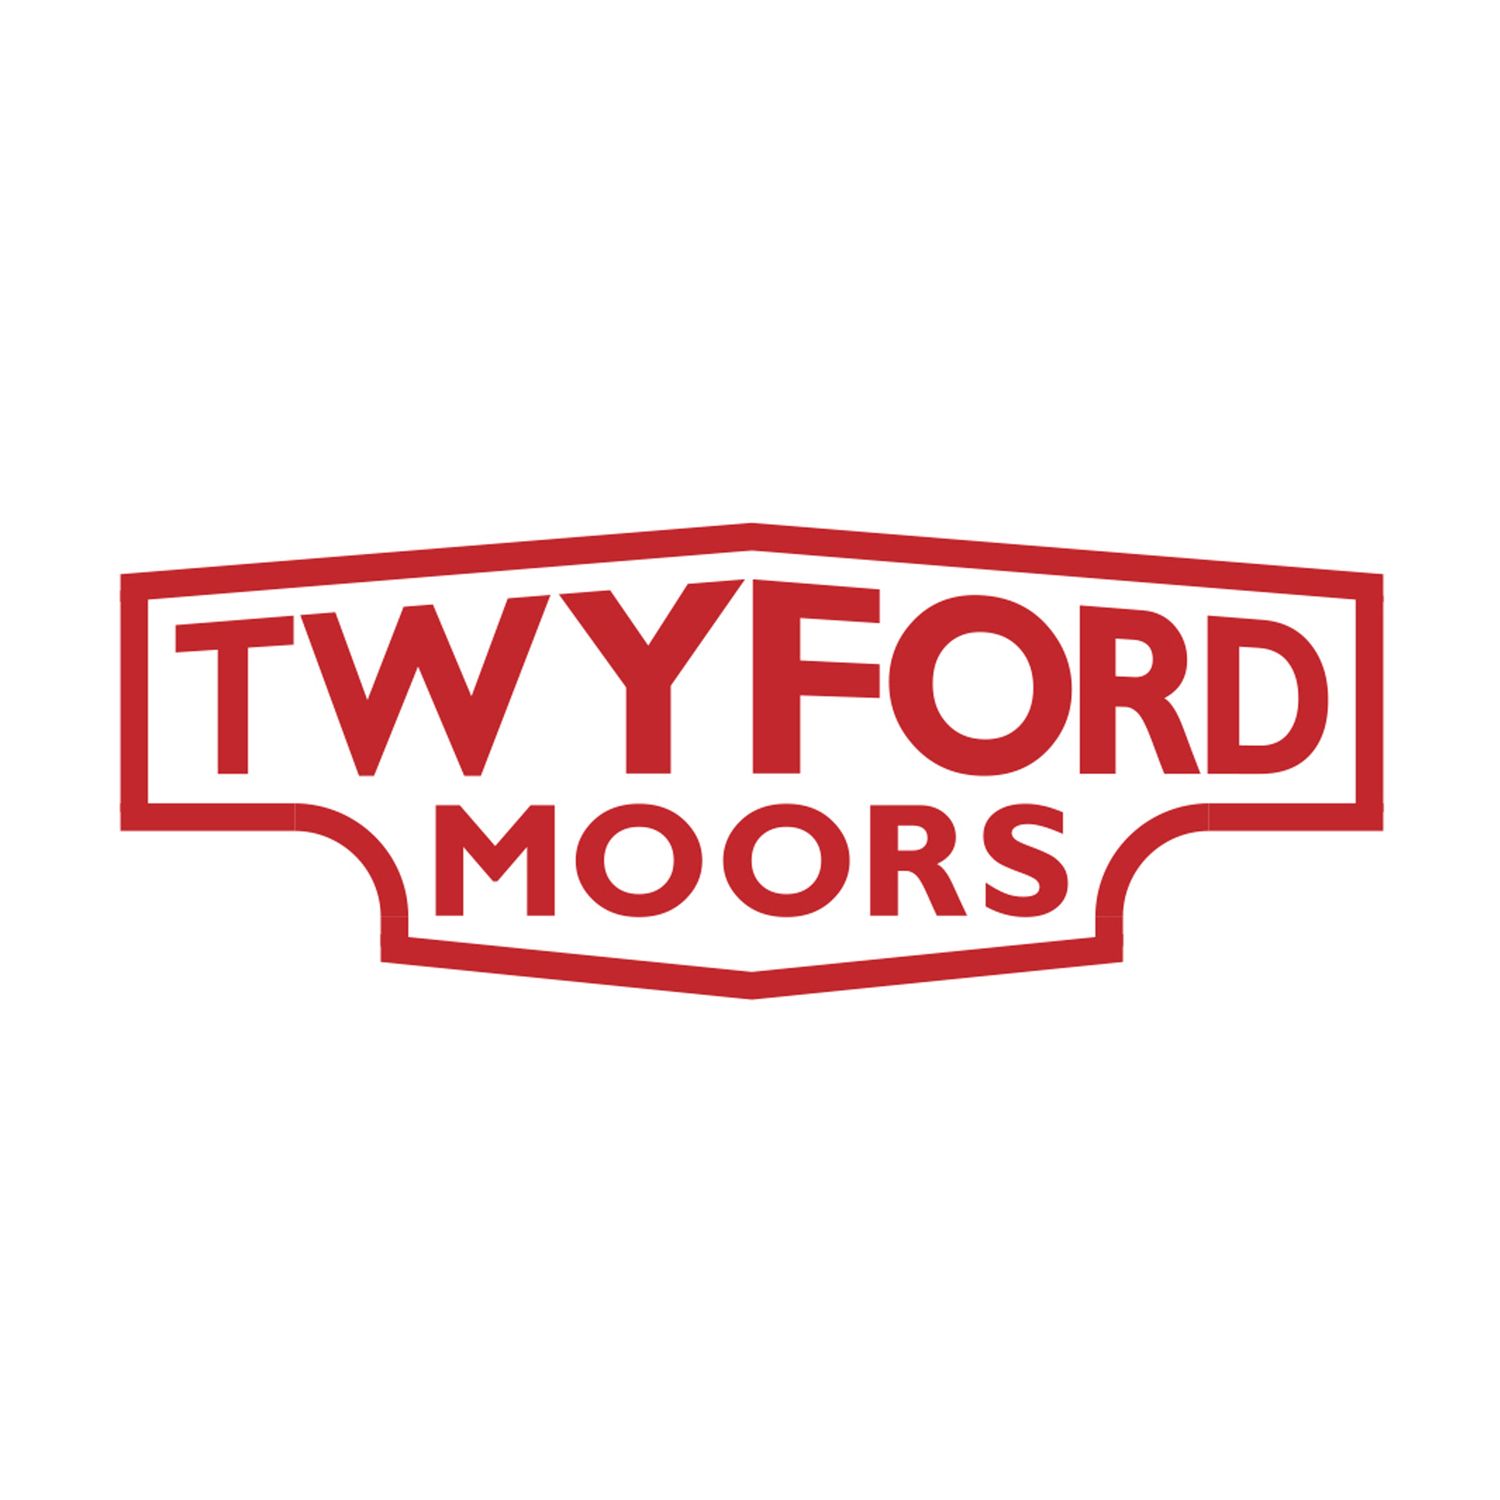 Twyford Moors Classic Cars Ltd